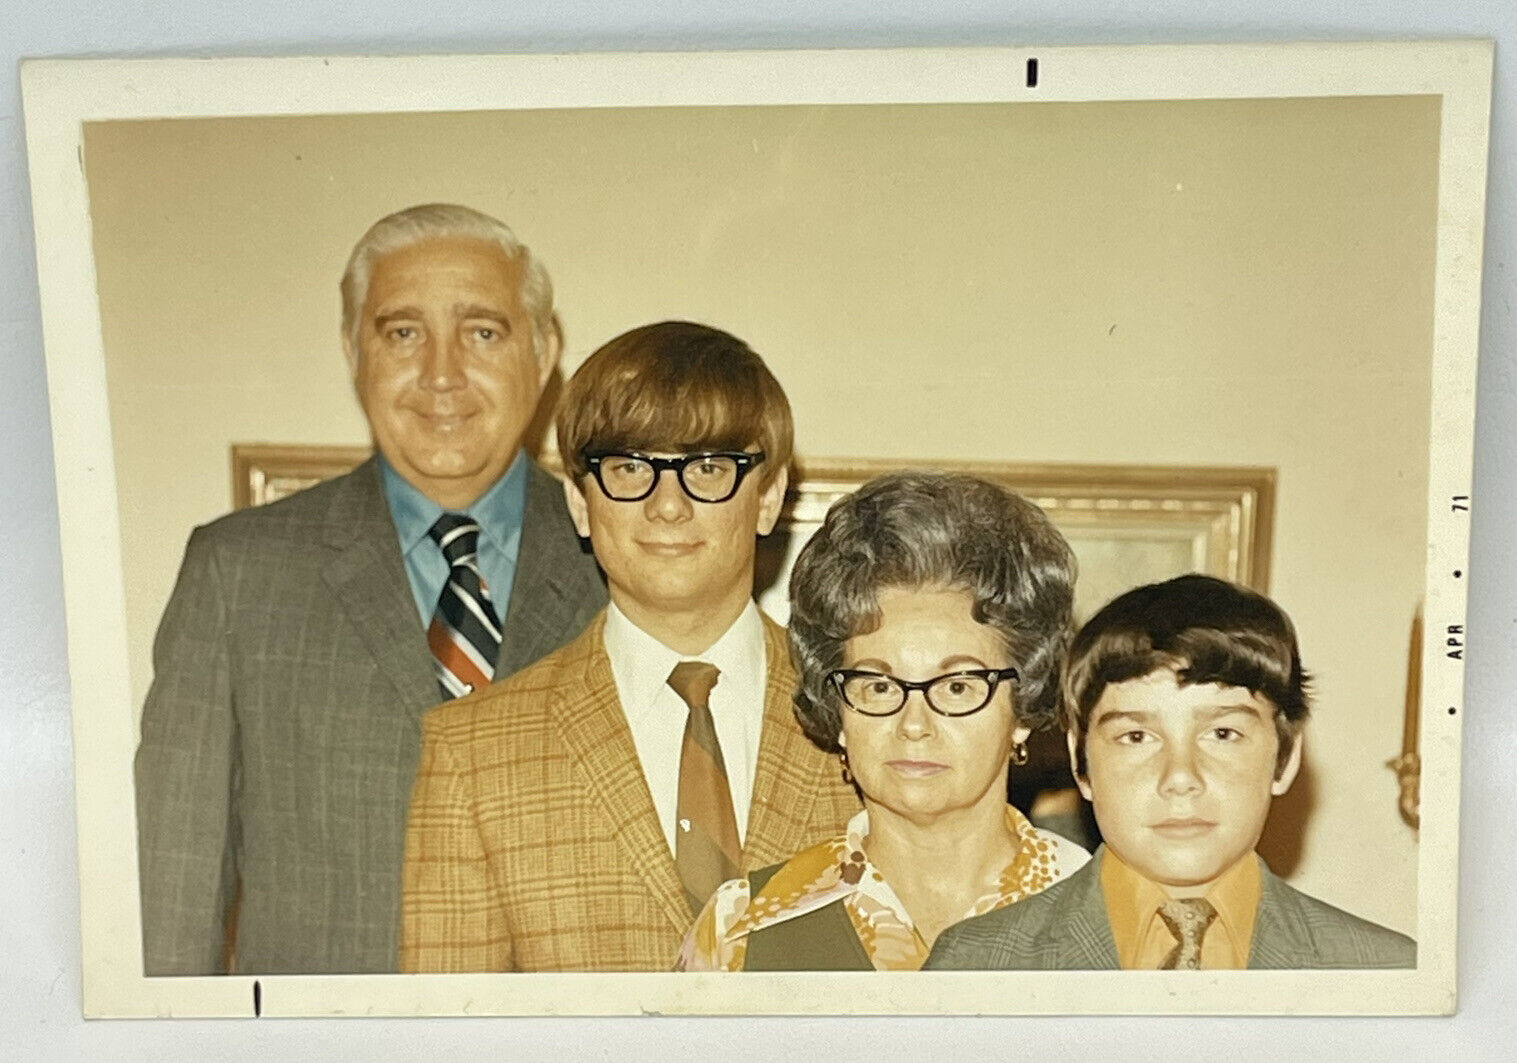 Vtg 1971 Found Photo Retro Family Wearing Thick Framed Glasses Teased Hair Color